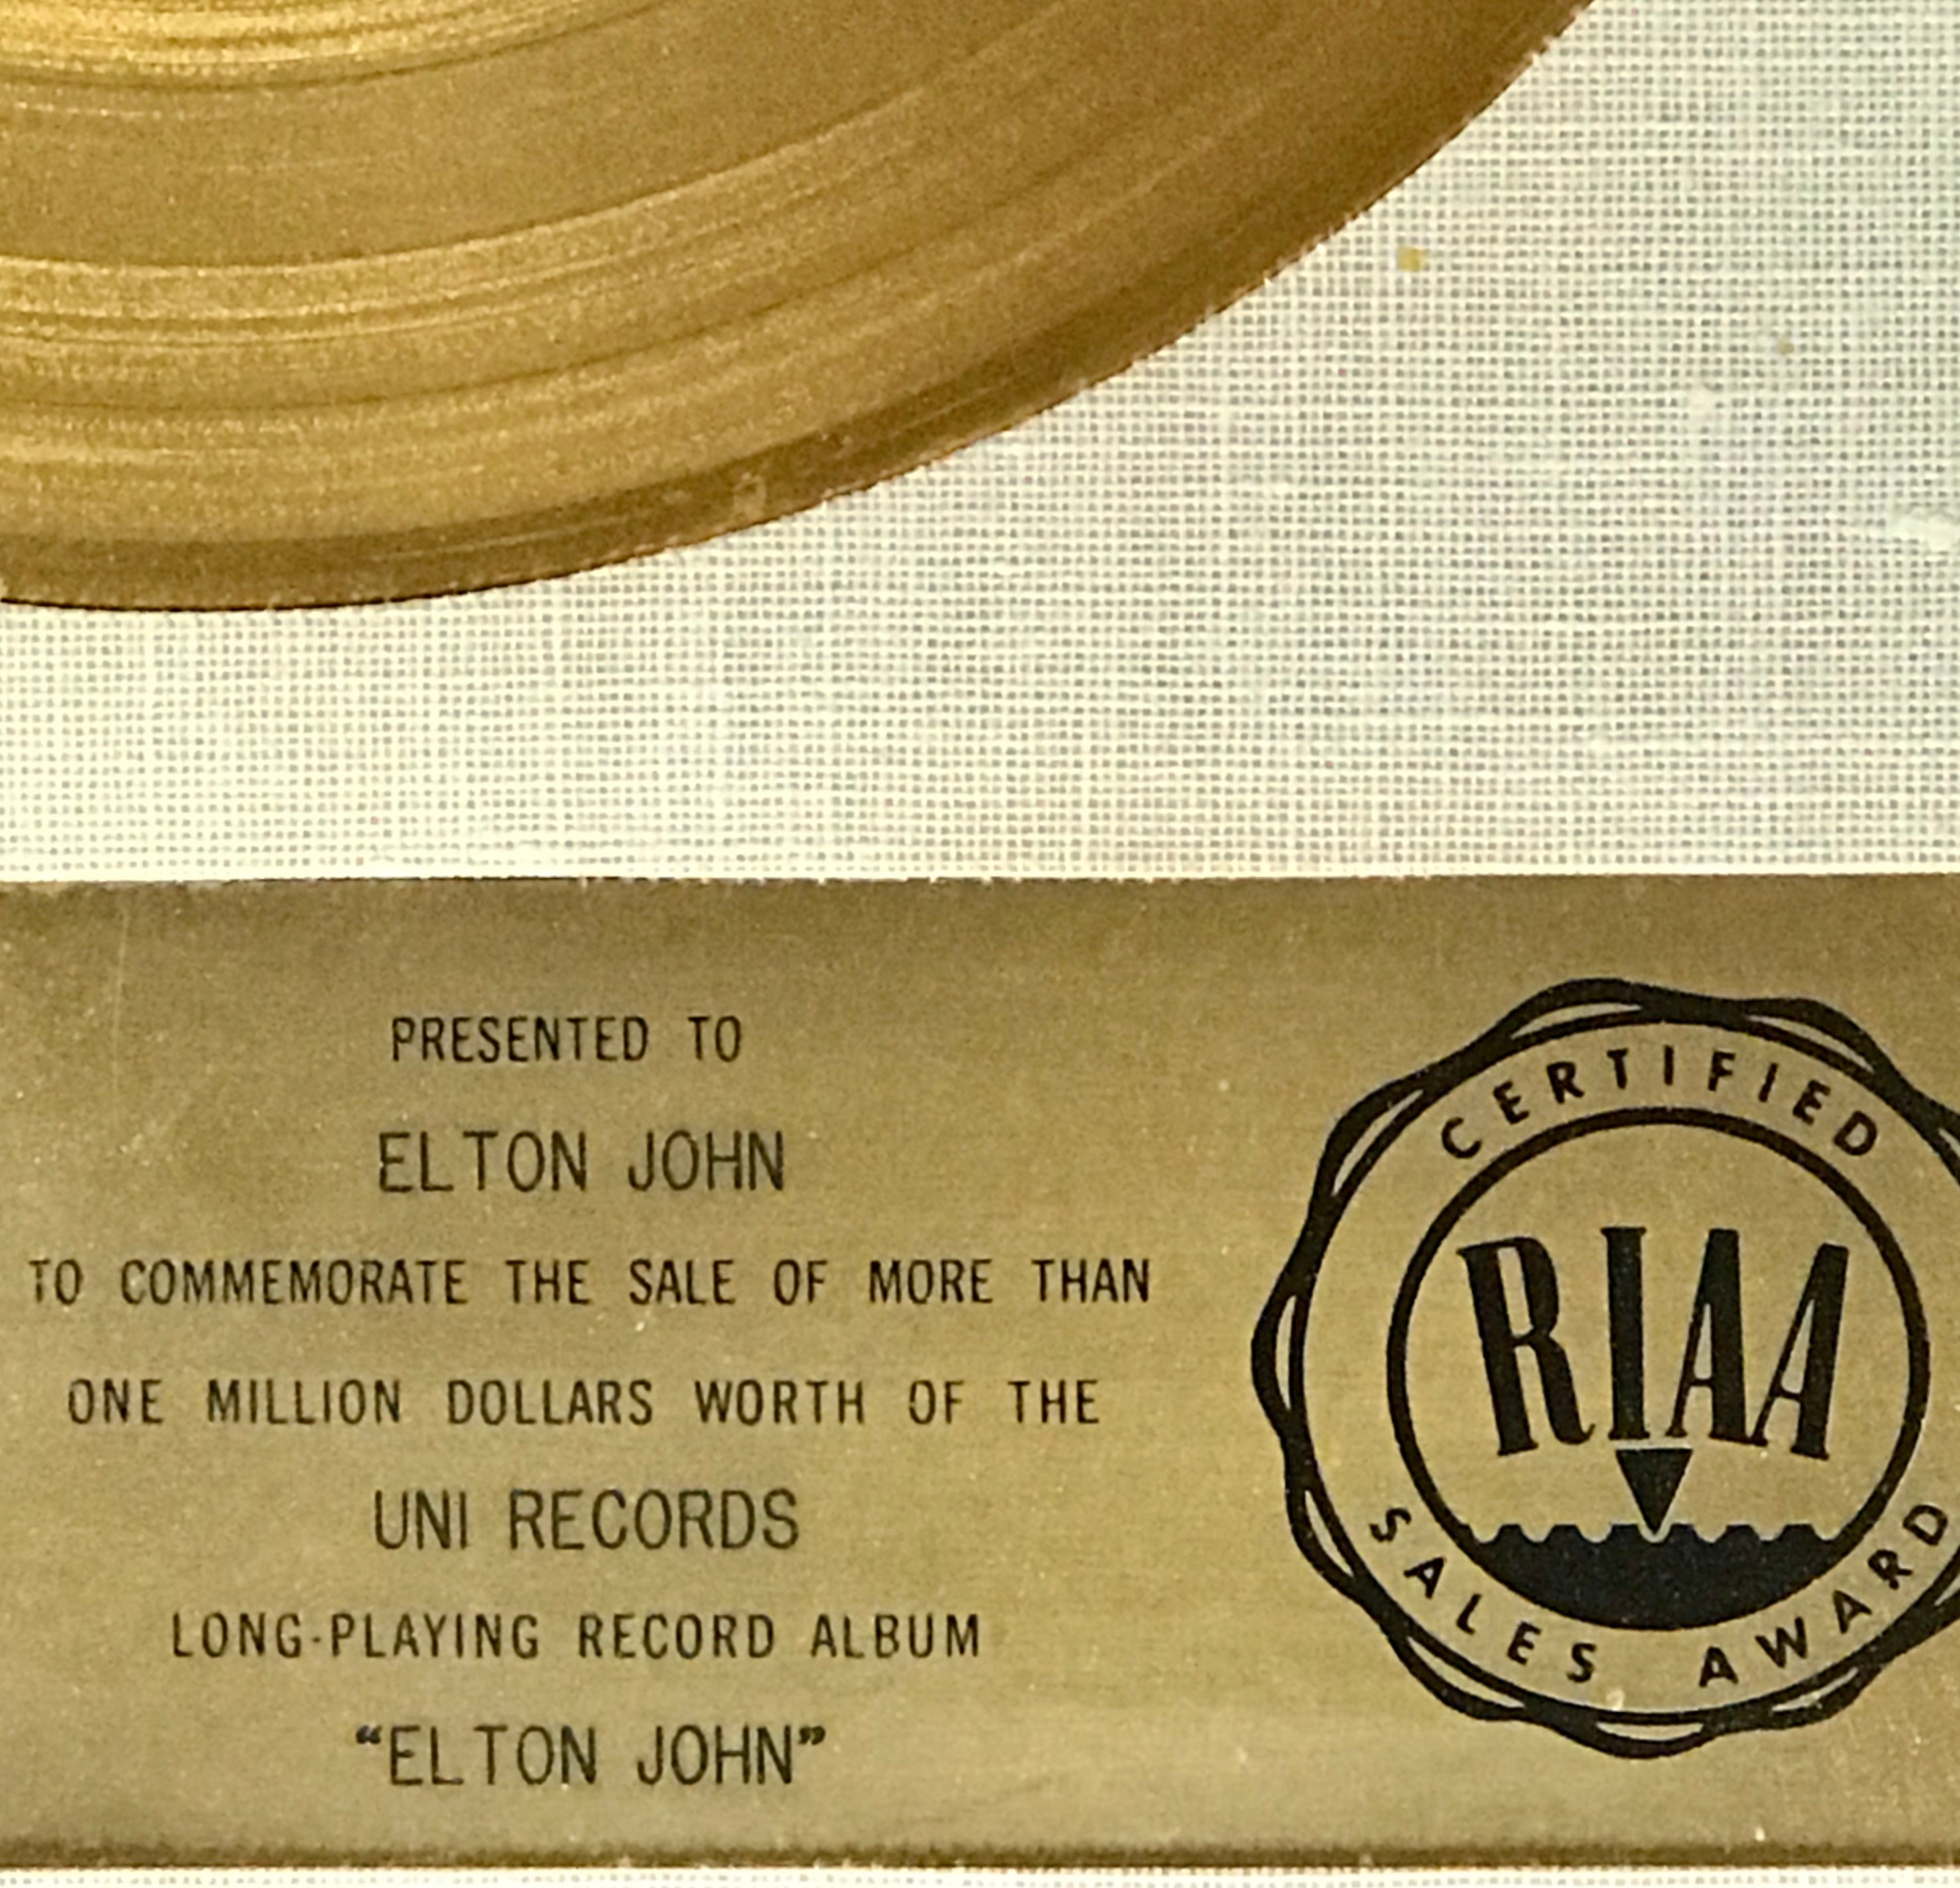 Elton John RIAA award presentation plate